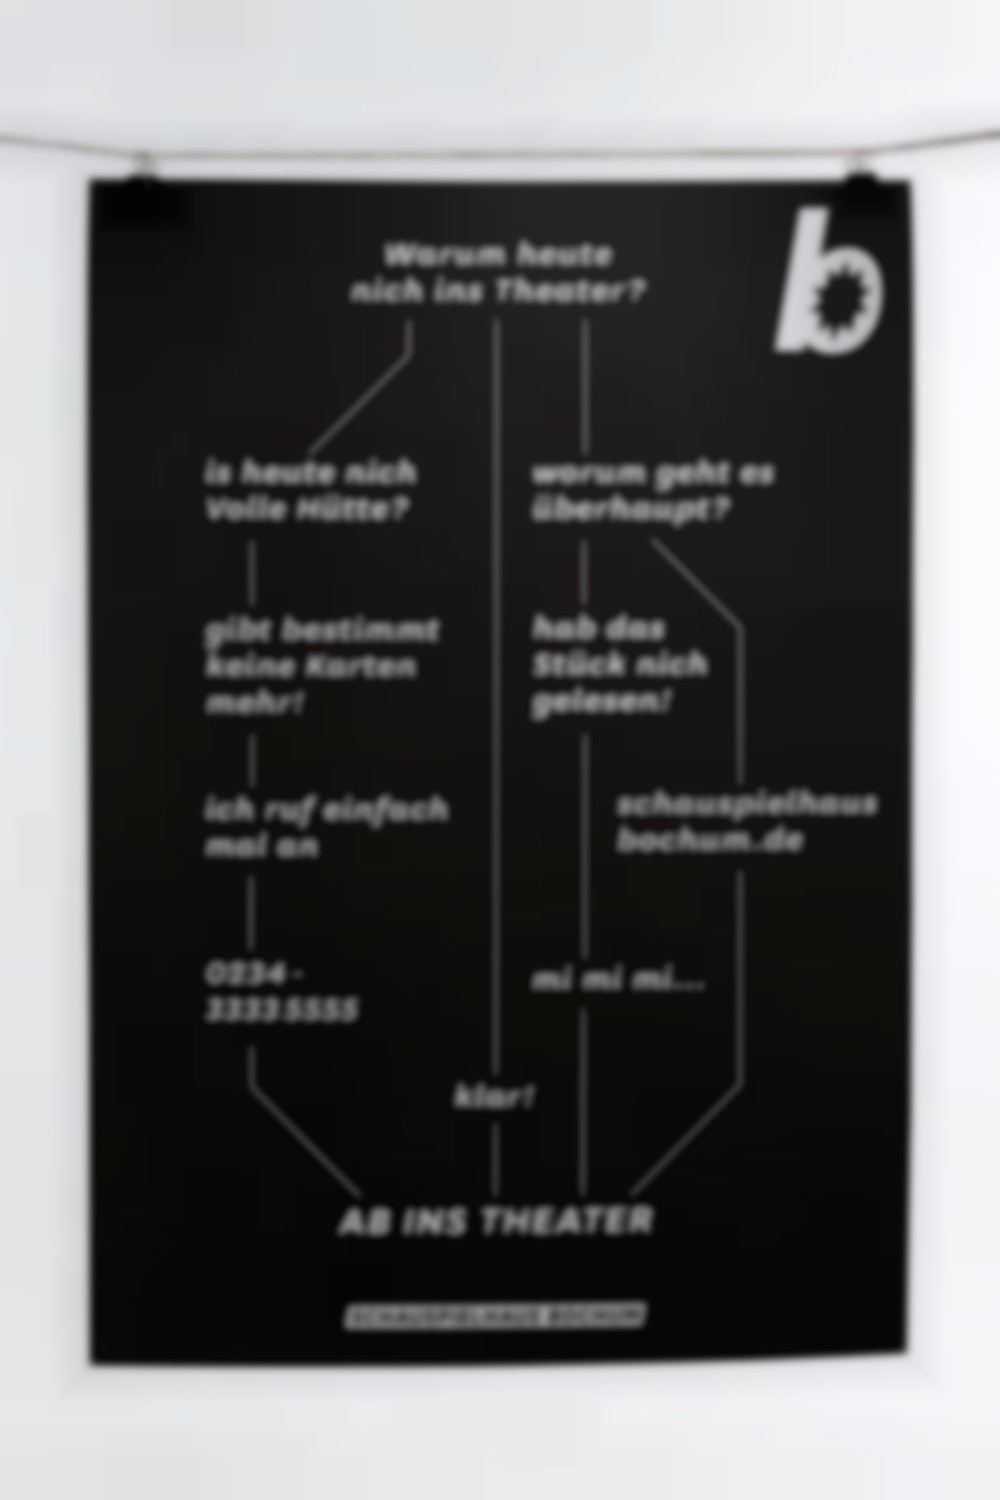 Ab ins Theater Plakat